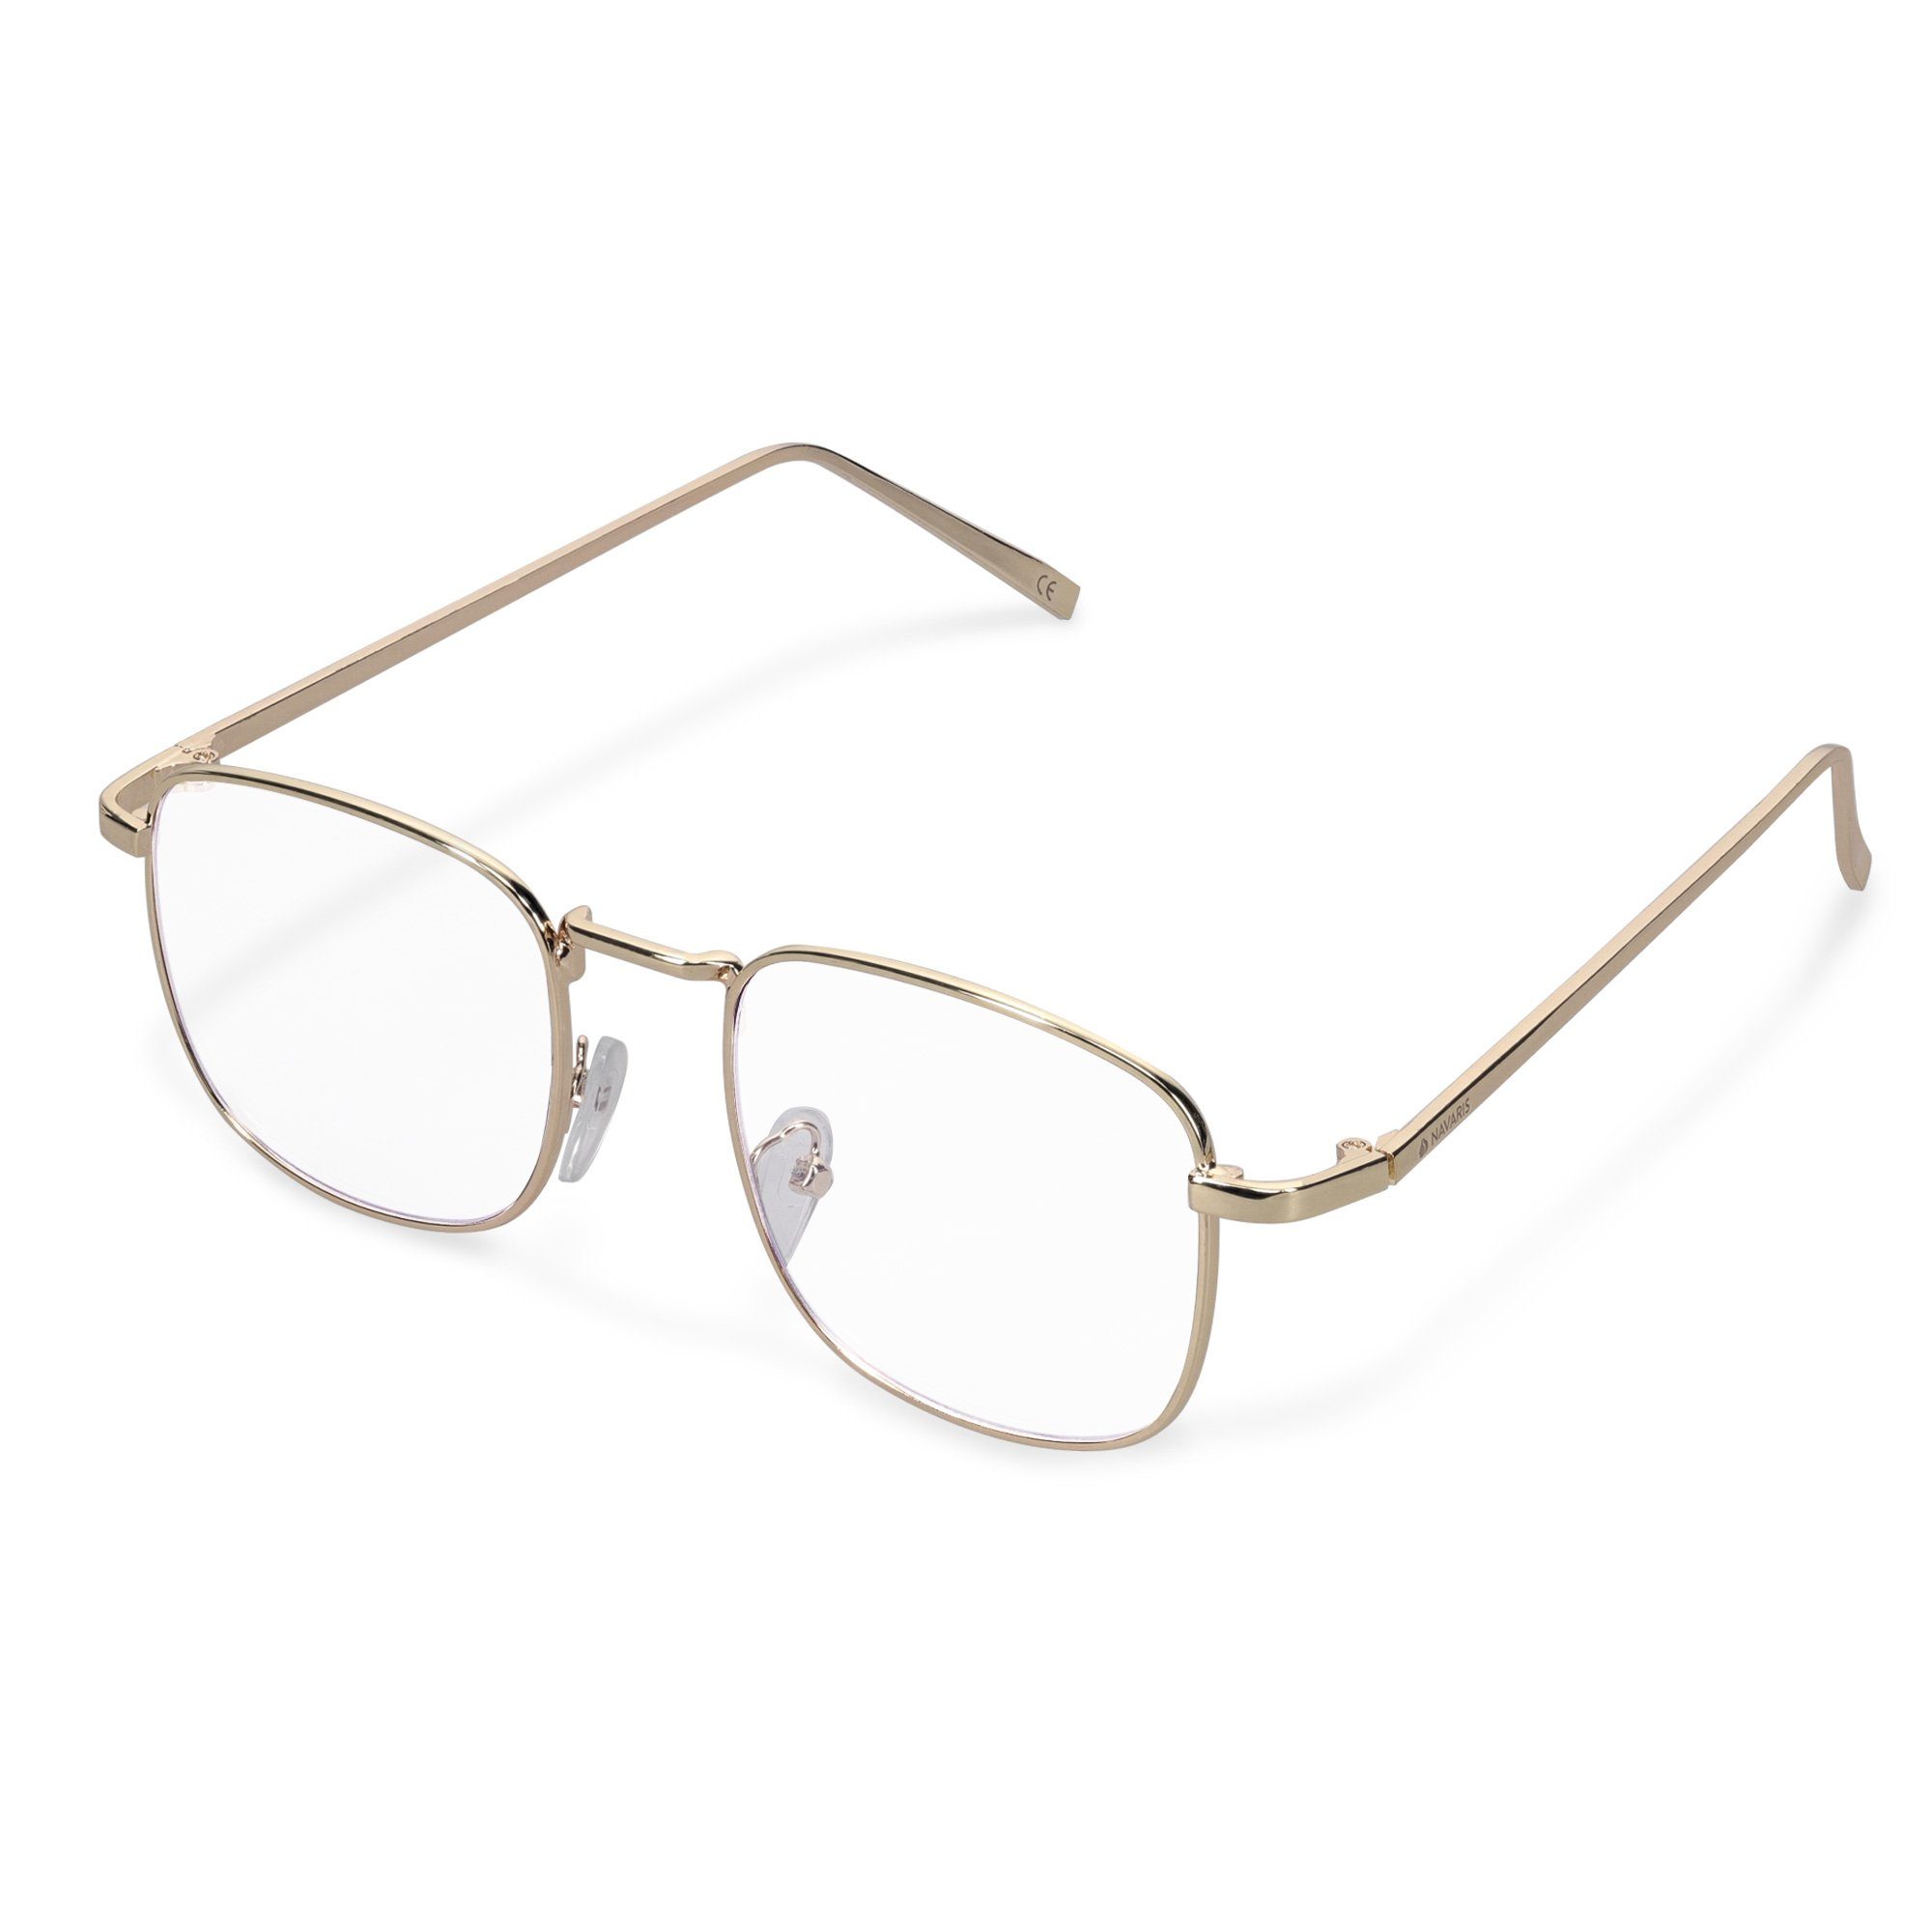 Navaris Brille Vintage Modebrille ohne Sehstärke - Anti Blaulicht -  Metallbügel